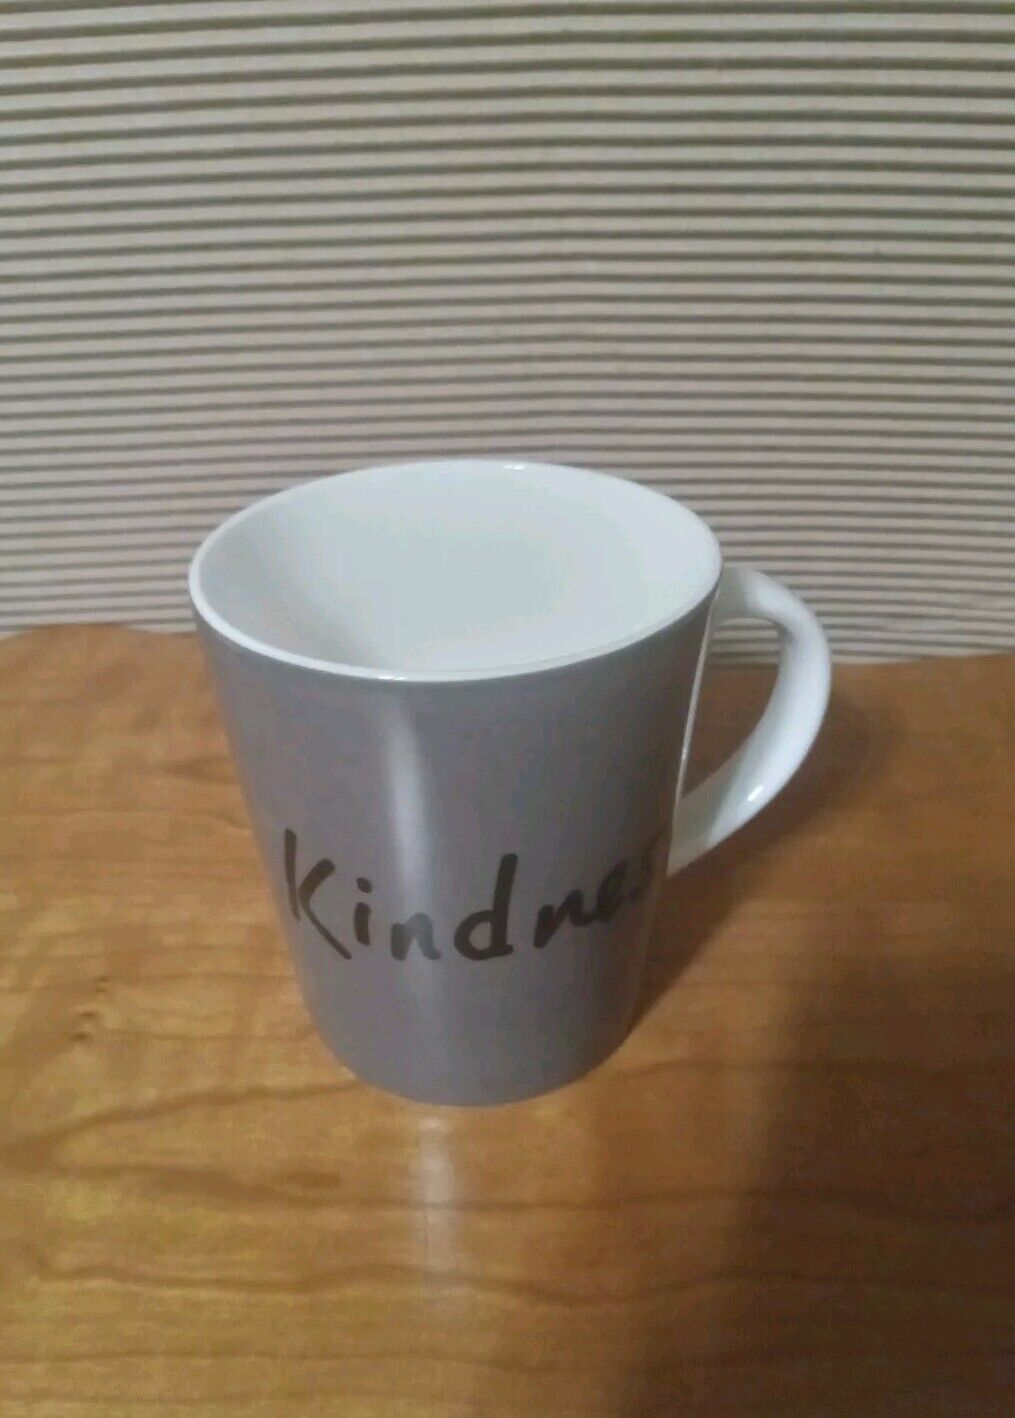 Ellen Degeneres Kindness Mug 16oz  Royal Doulton Color Gray. New Without Tag